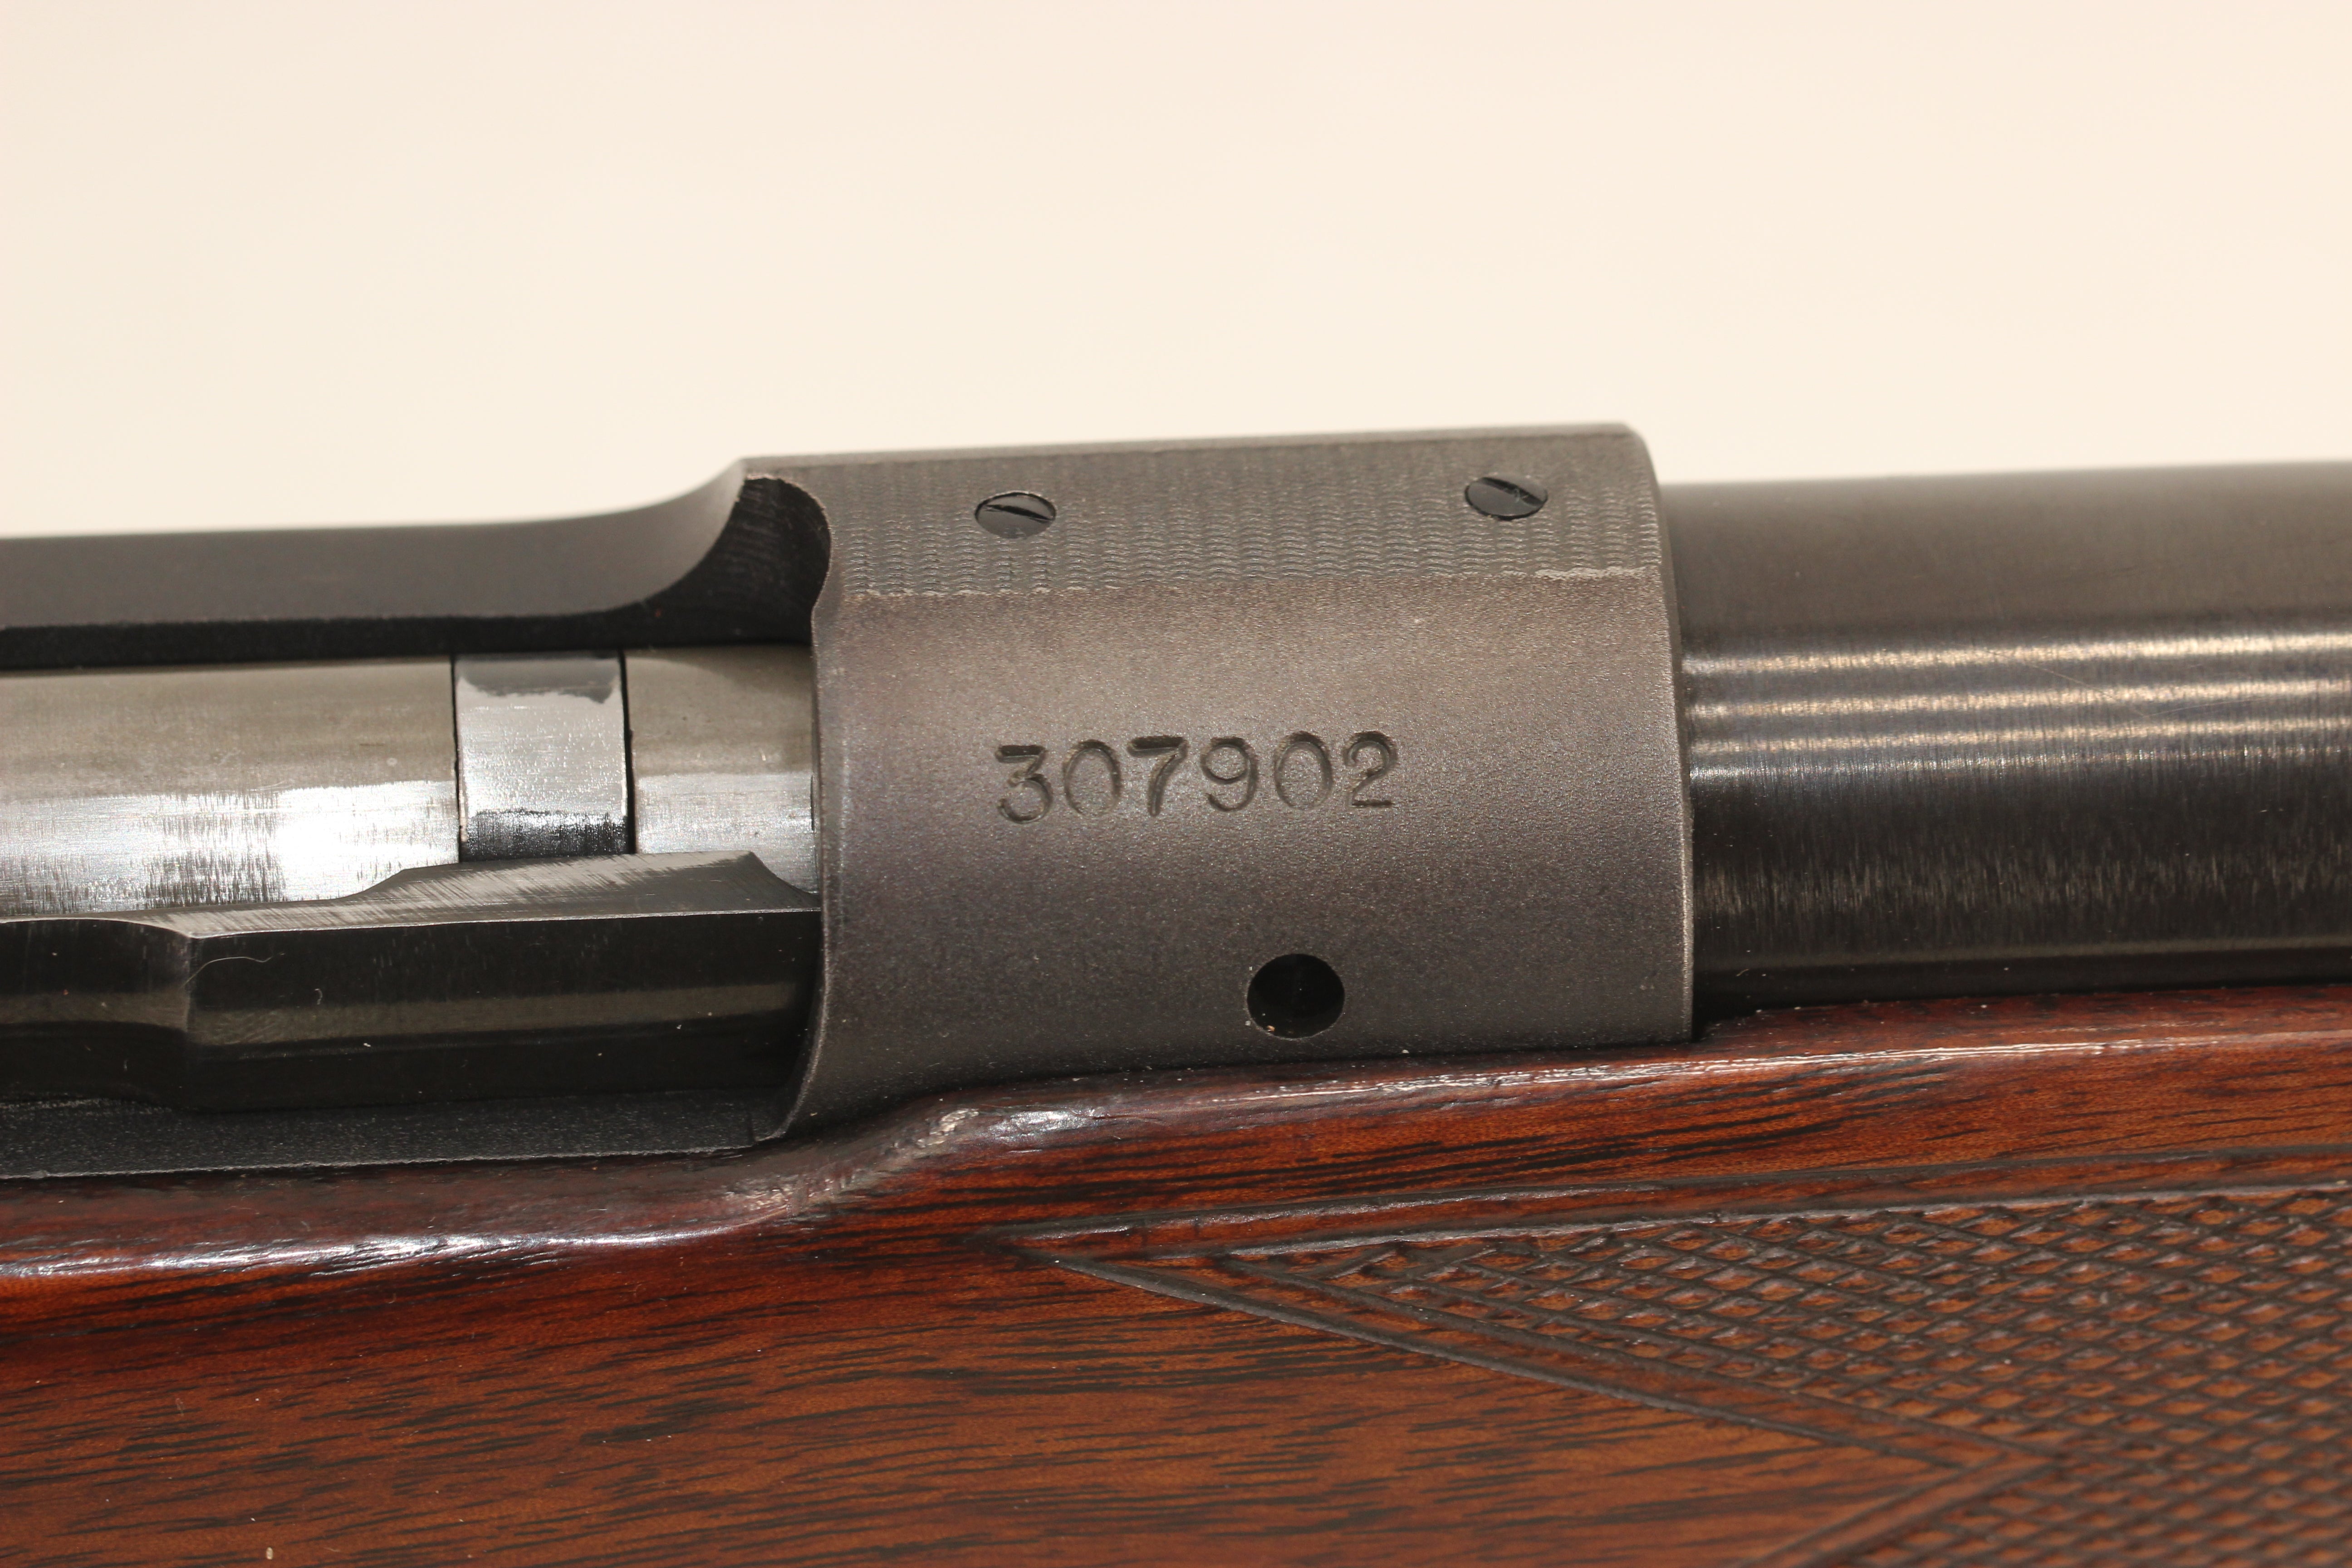 .300 H&H Mag Super Grade Rifle - 1954